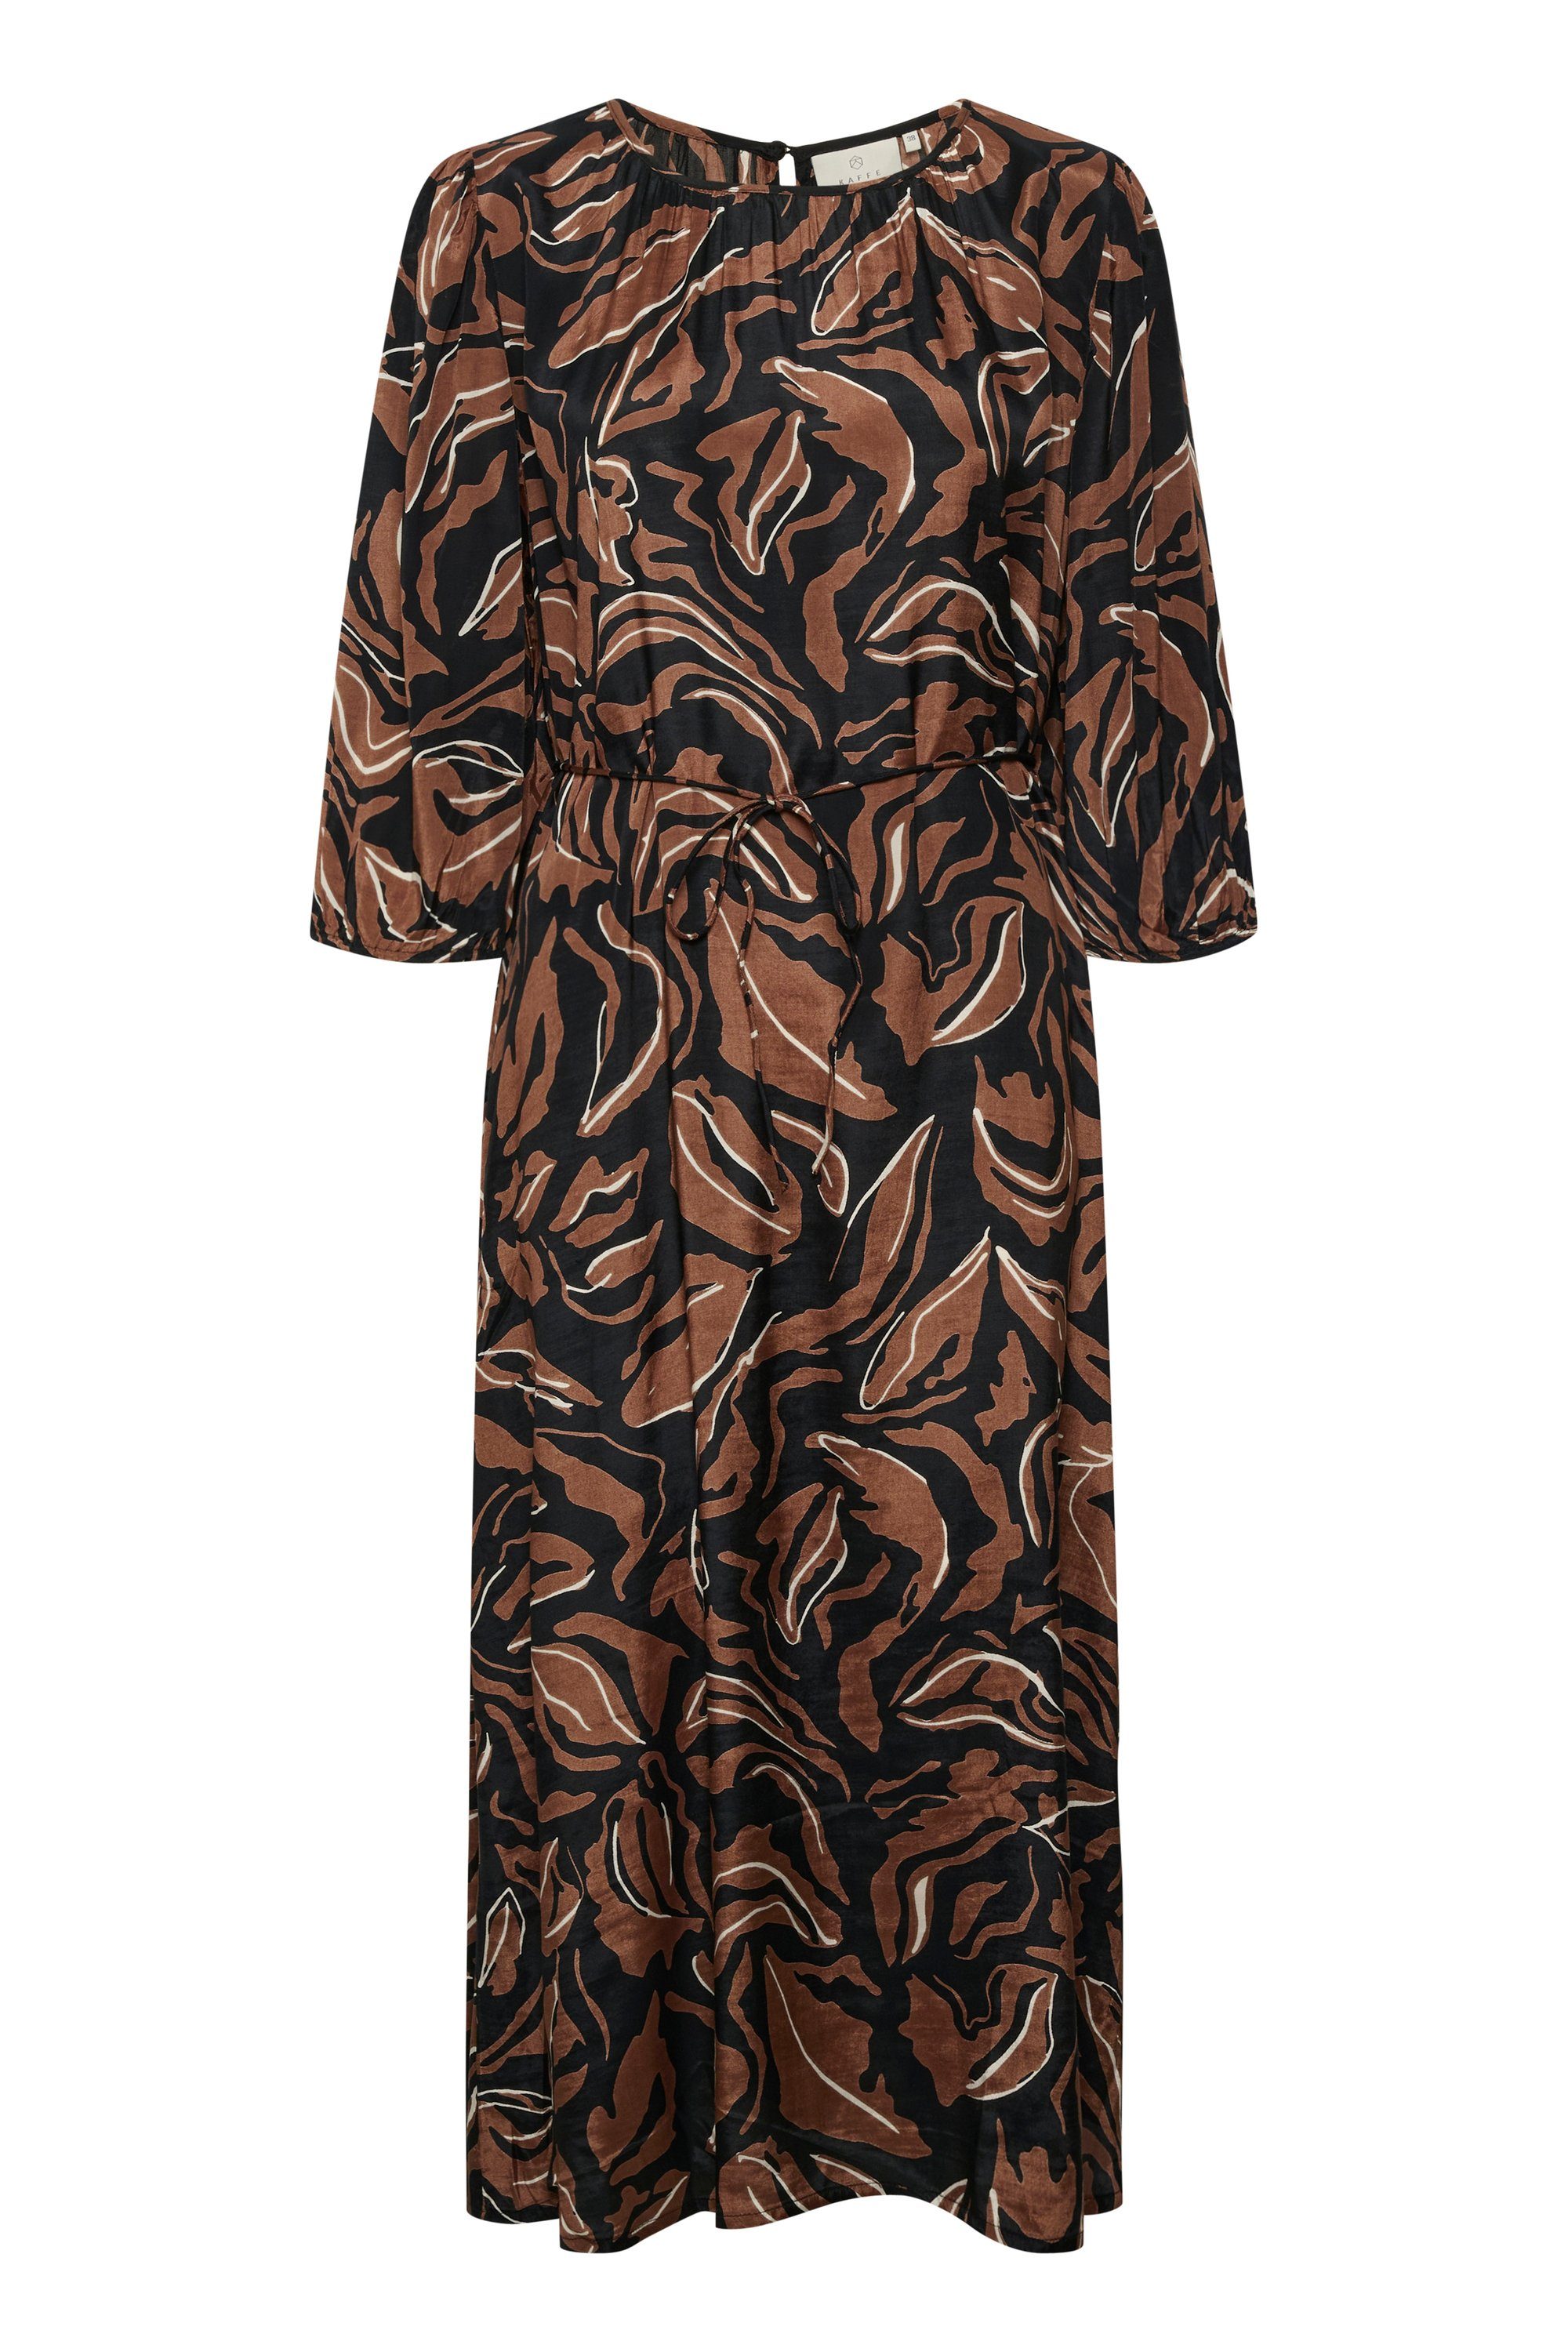 KAFFE Jerseykleid Kleid KAdorita Black/Soft Print Leaf Silt